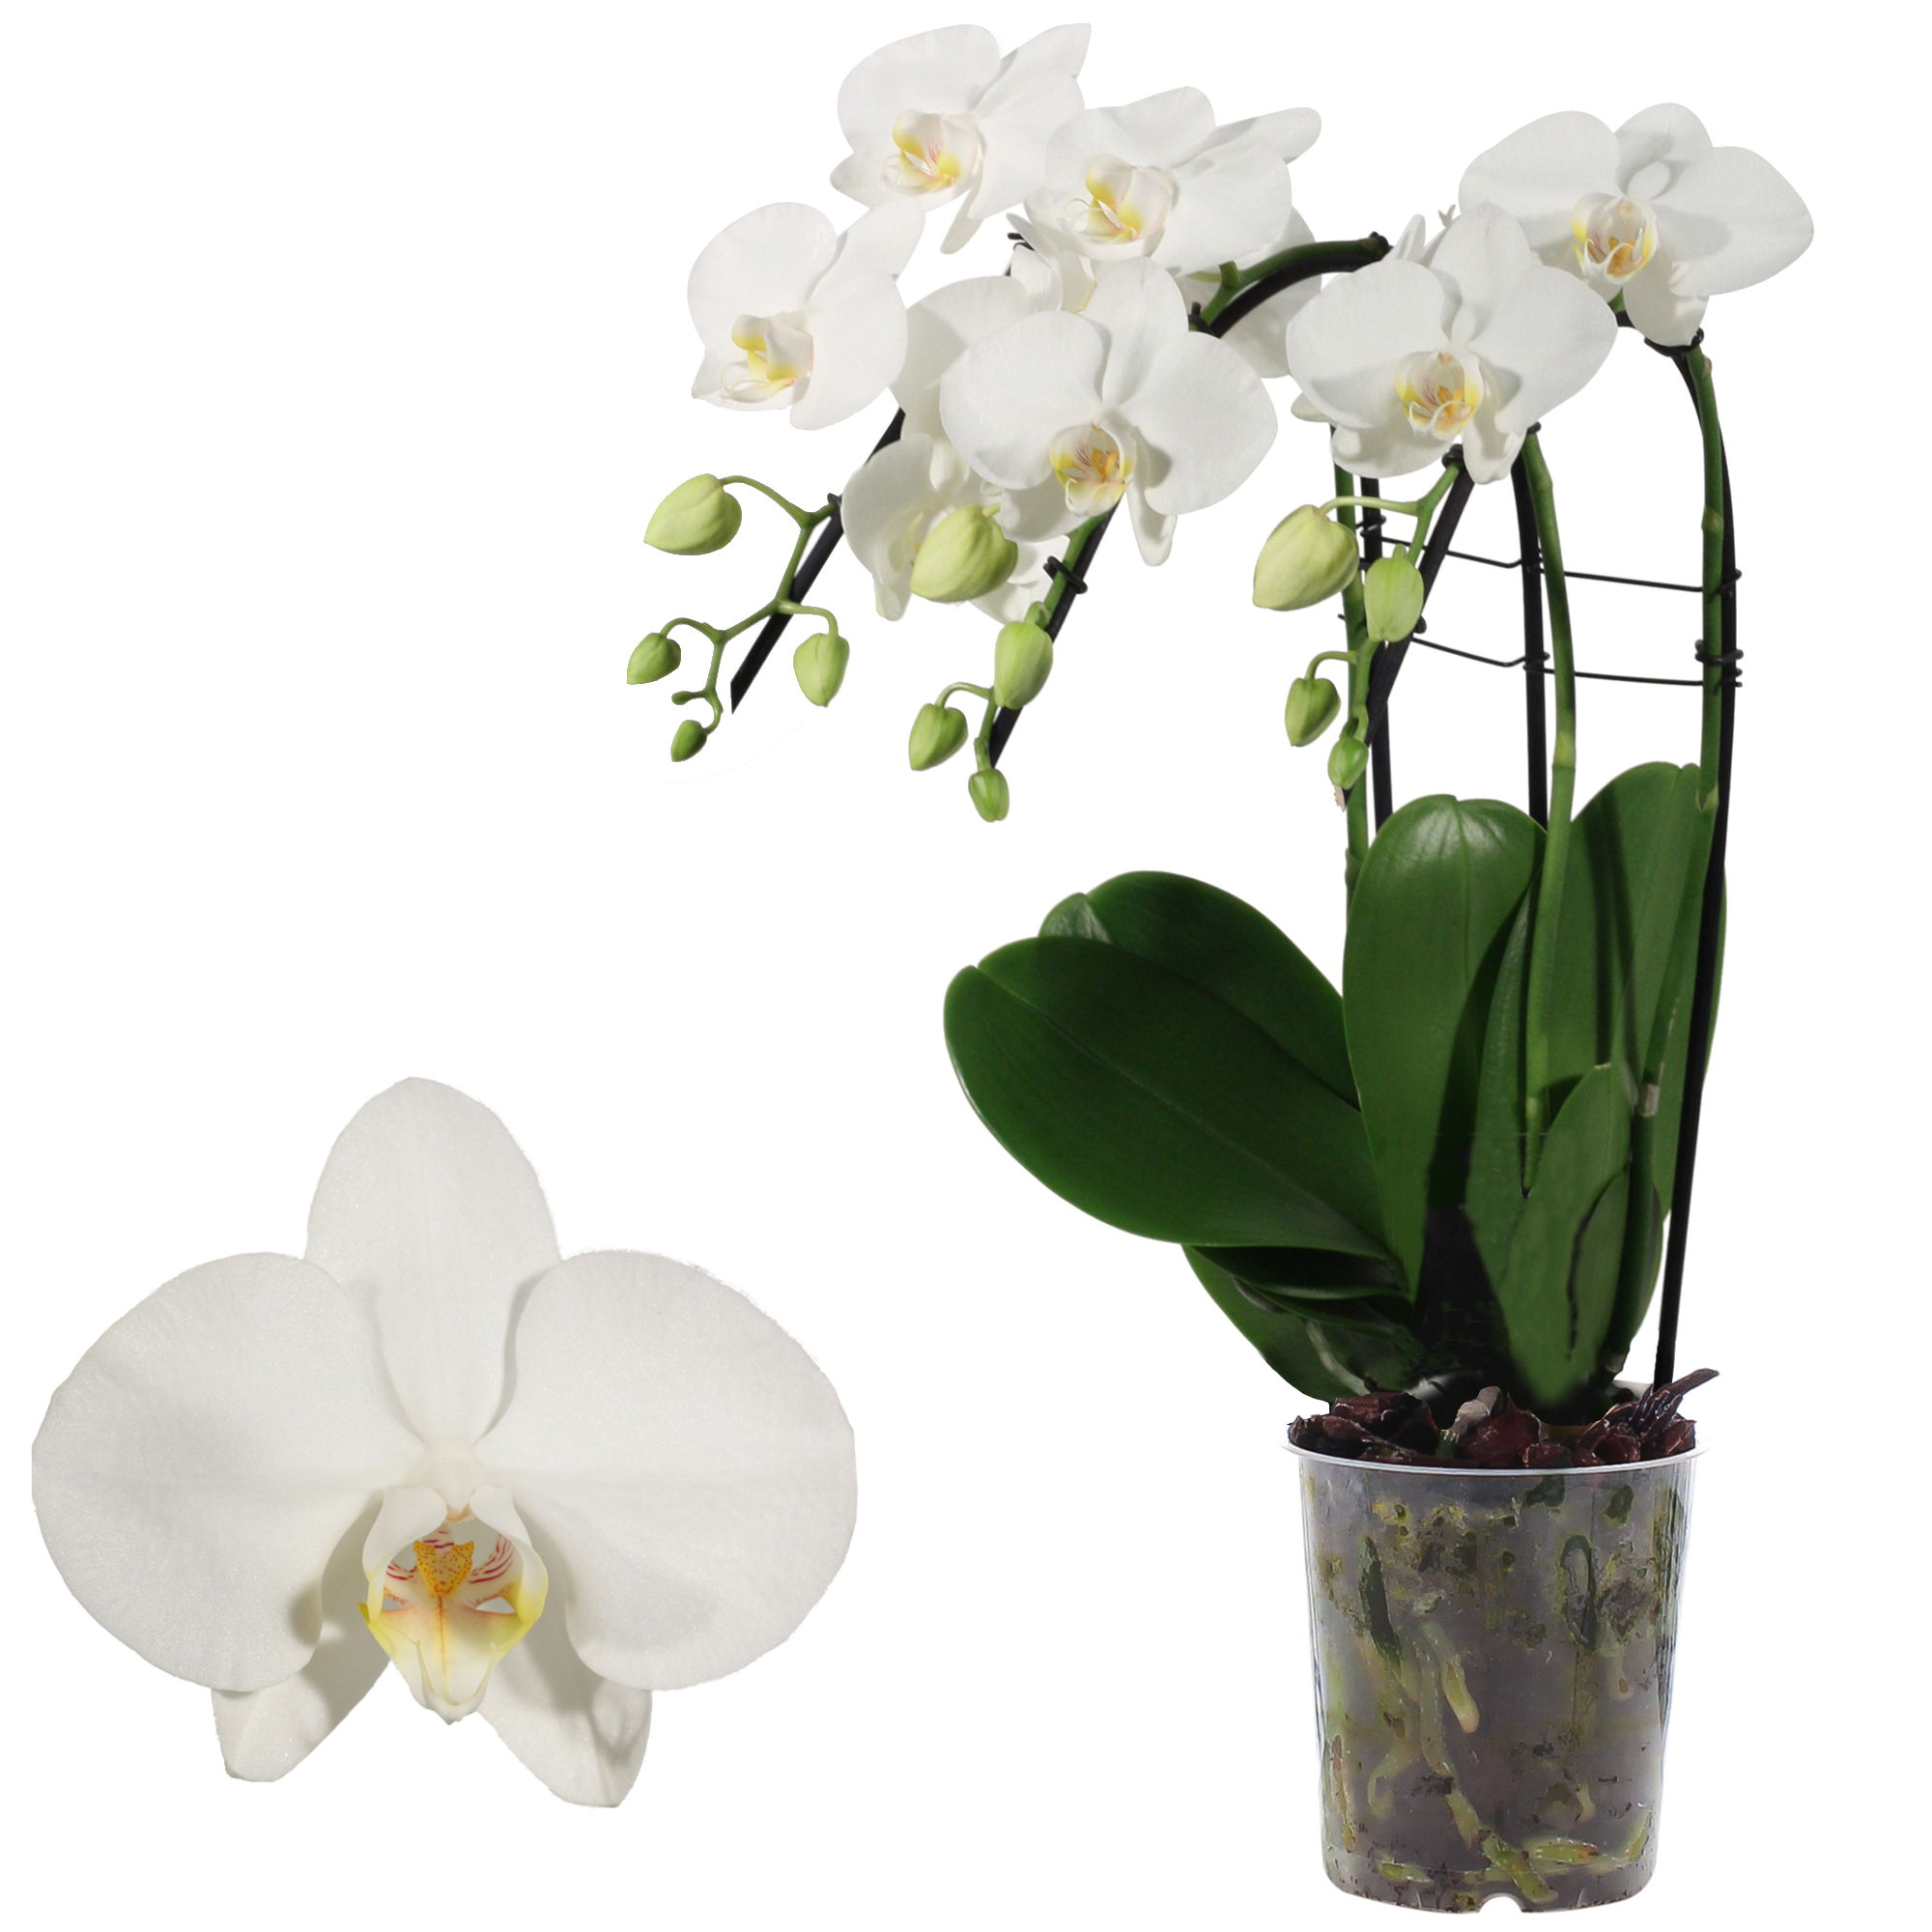 Schmetterlingsorchidee 'Tropic Snowball ' 3 Rispen weiß, 12 cm Topf + product picture